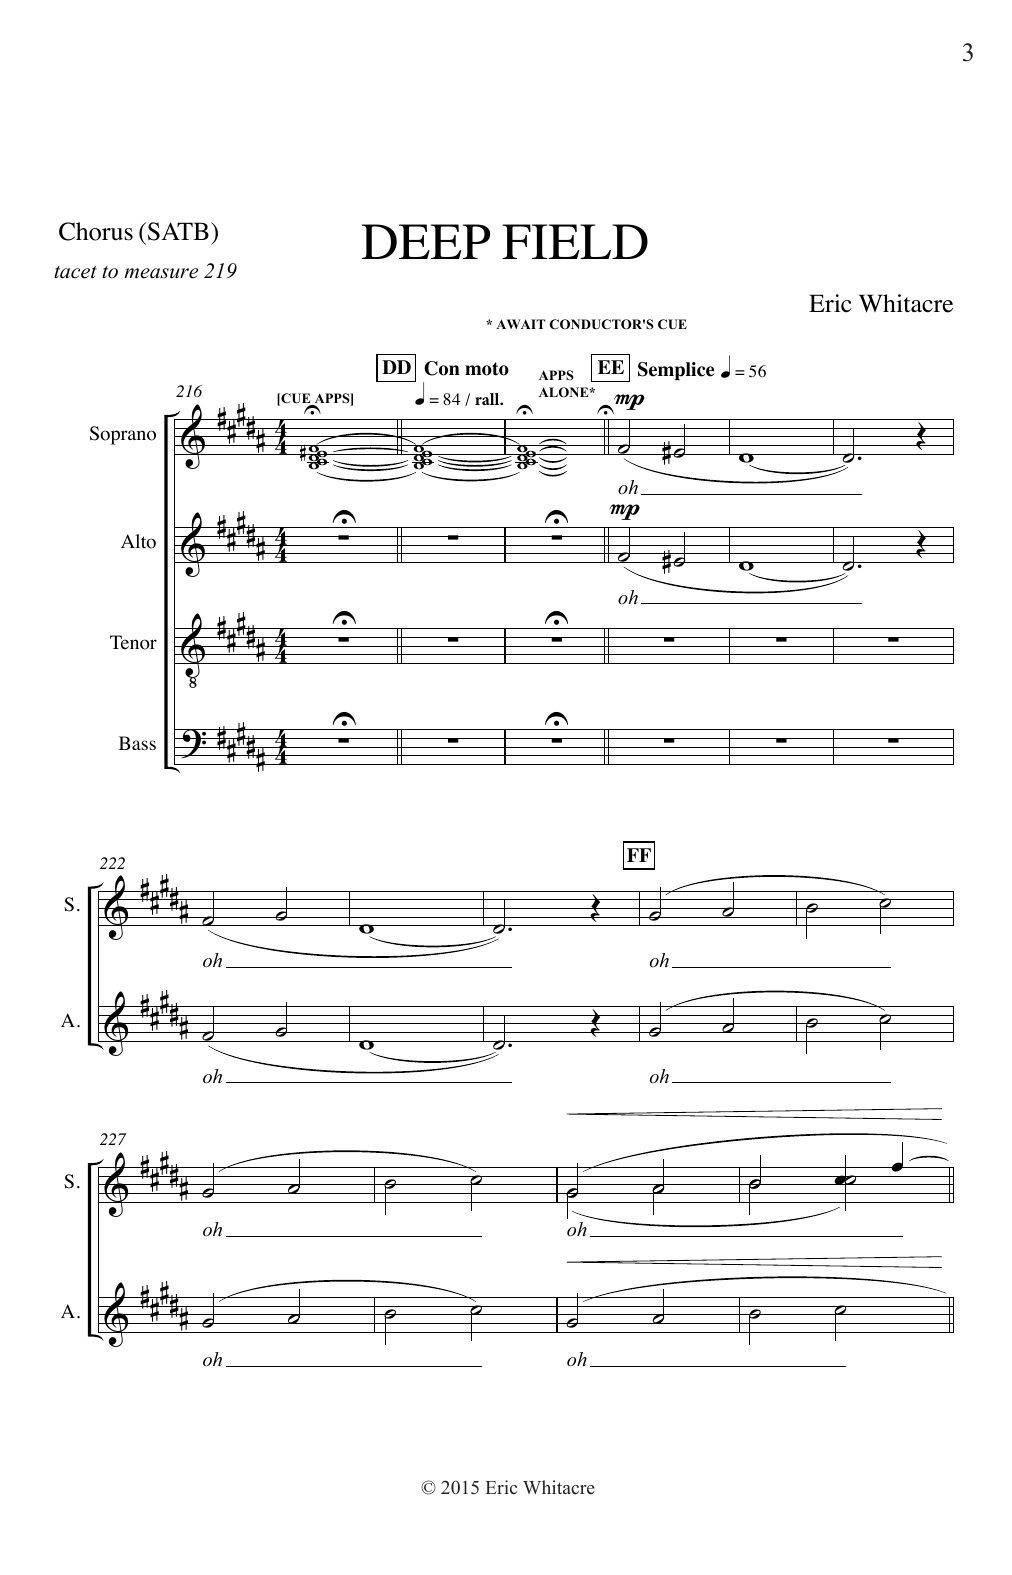 Download Eric Whitacre Deep Field Sheet Music